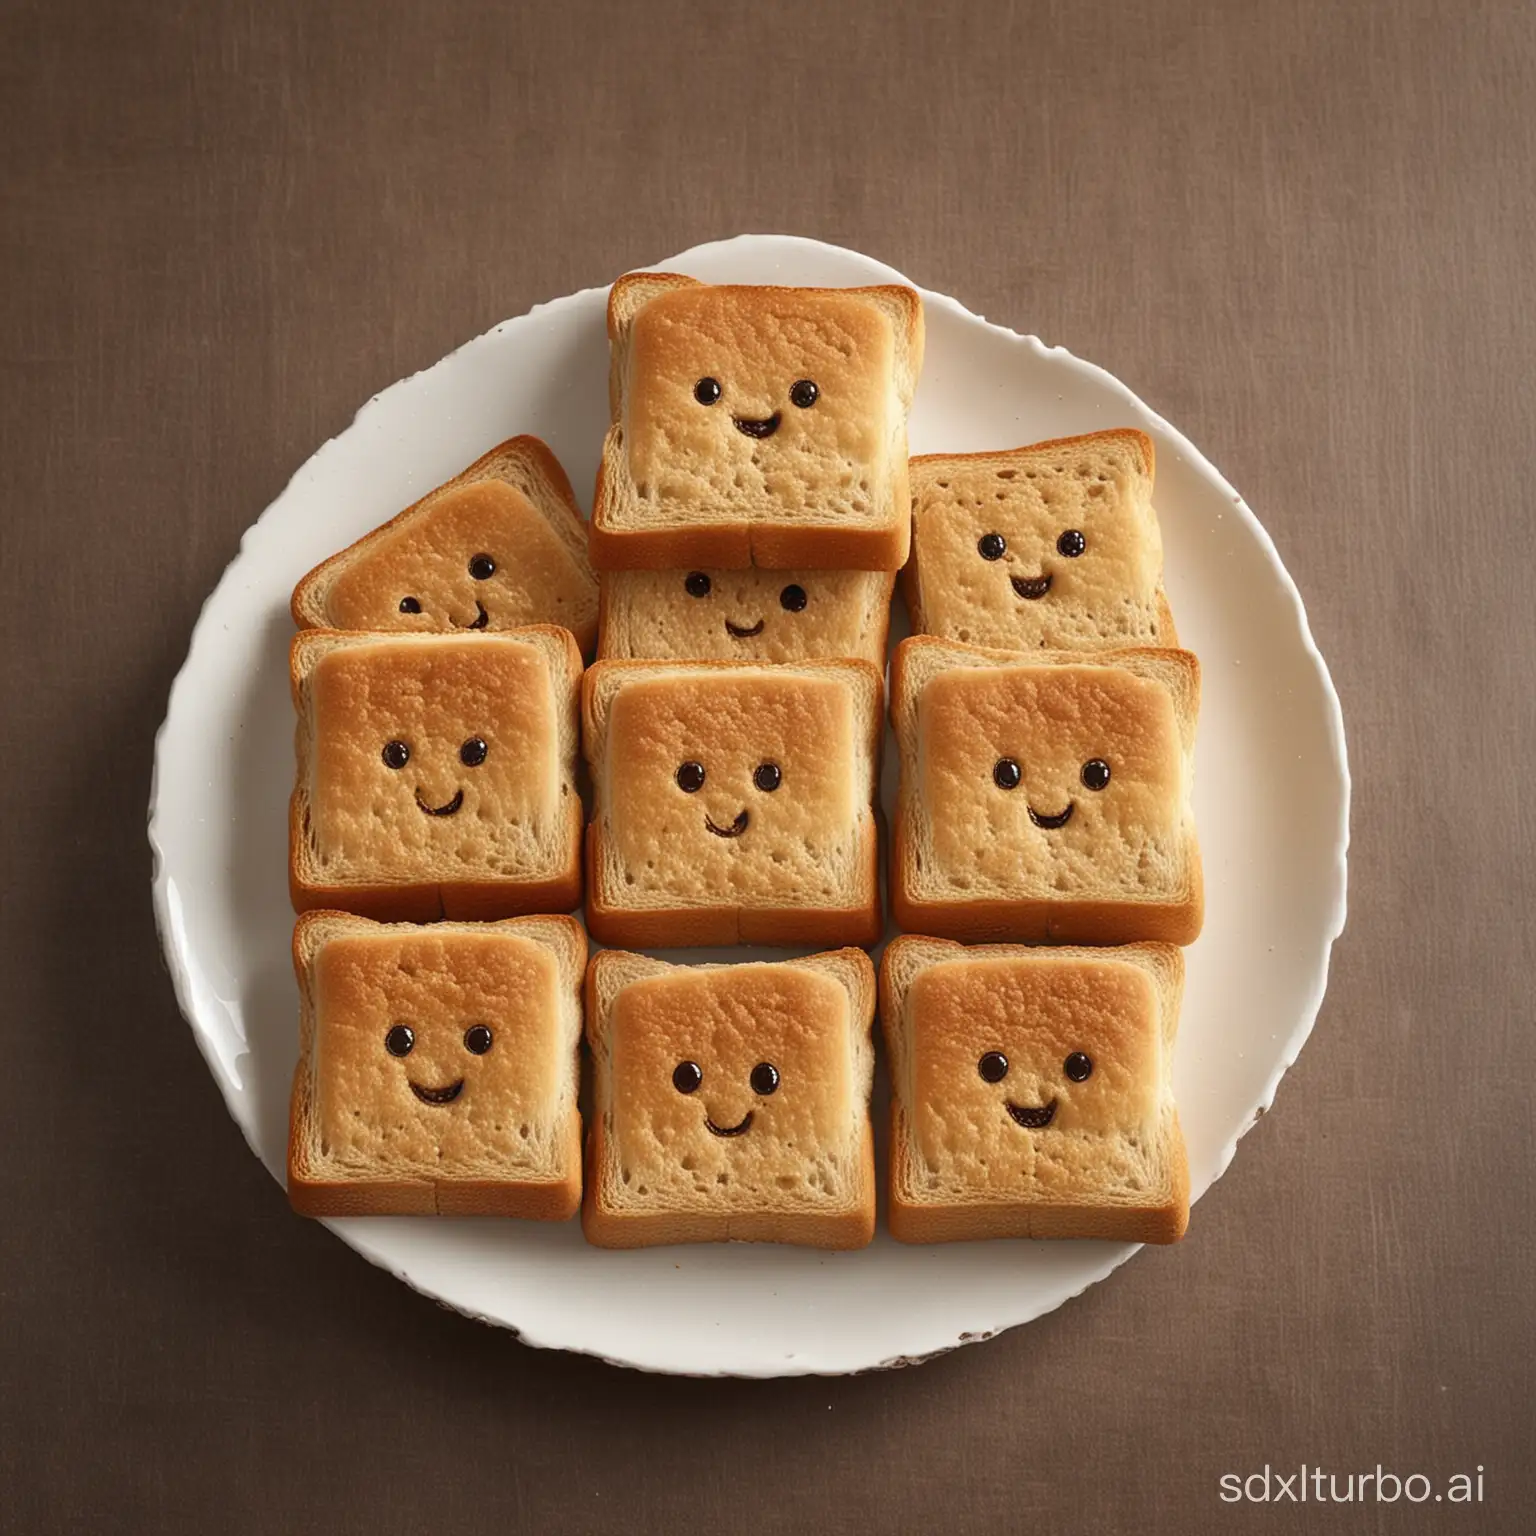 Small squares, toast bread, anthropomorphic, cute